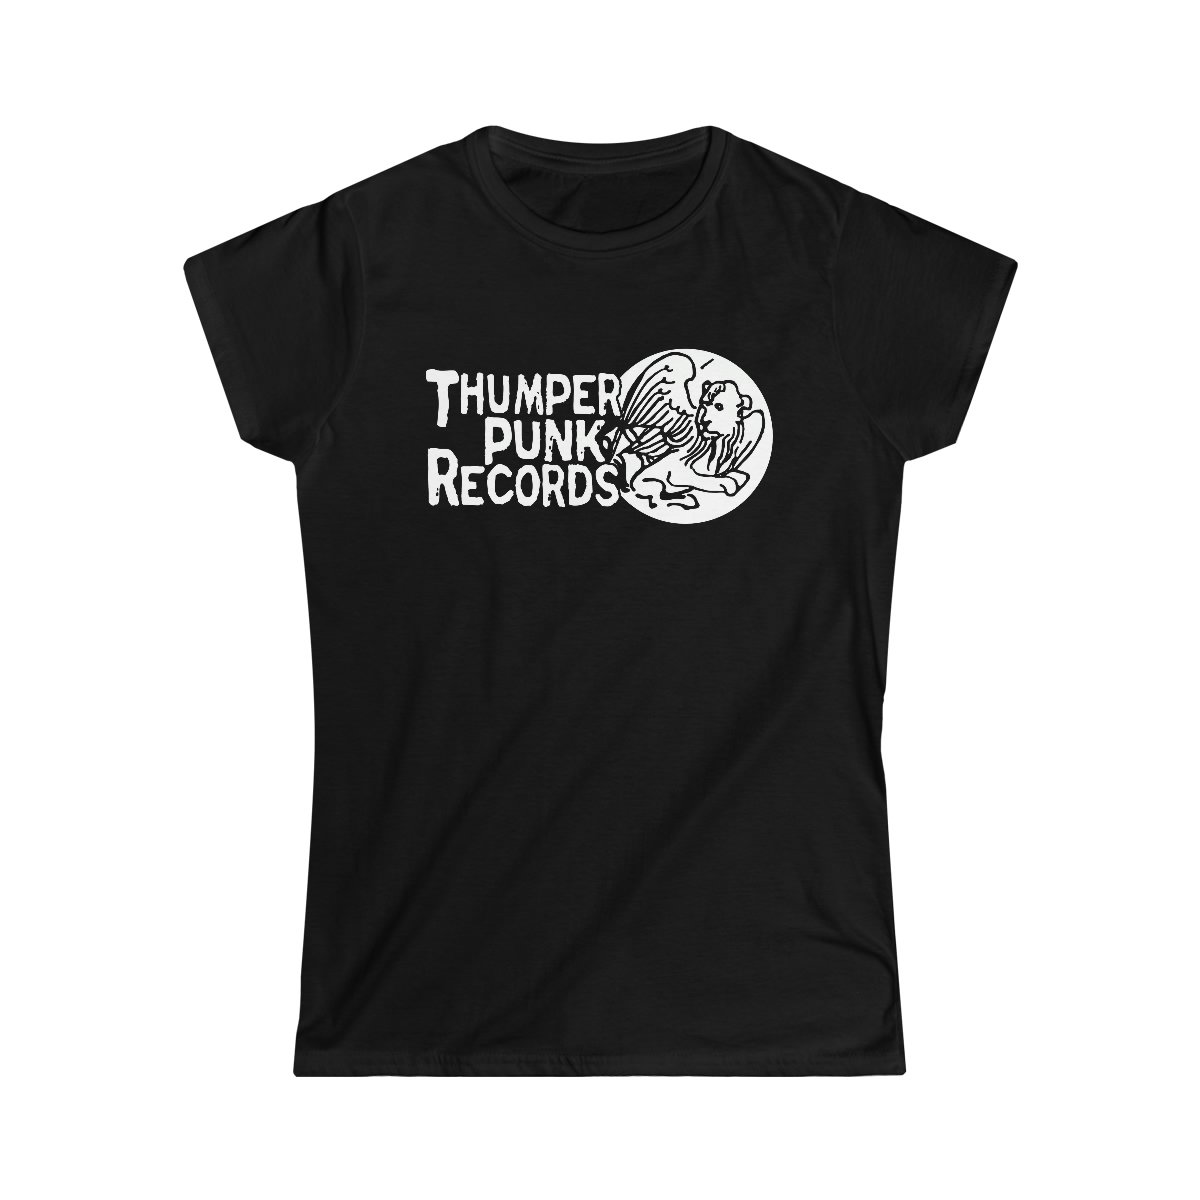 Thumper Punk Records Women’s Short Sleeve Tshirt